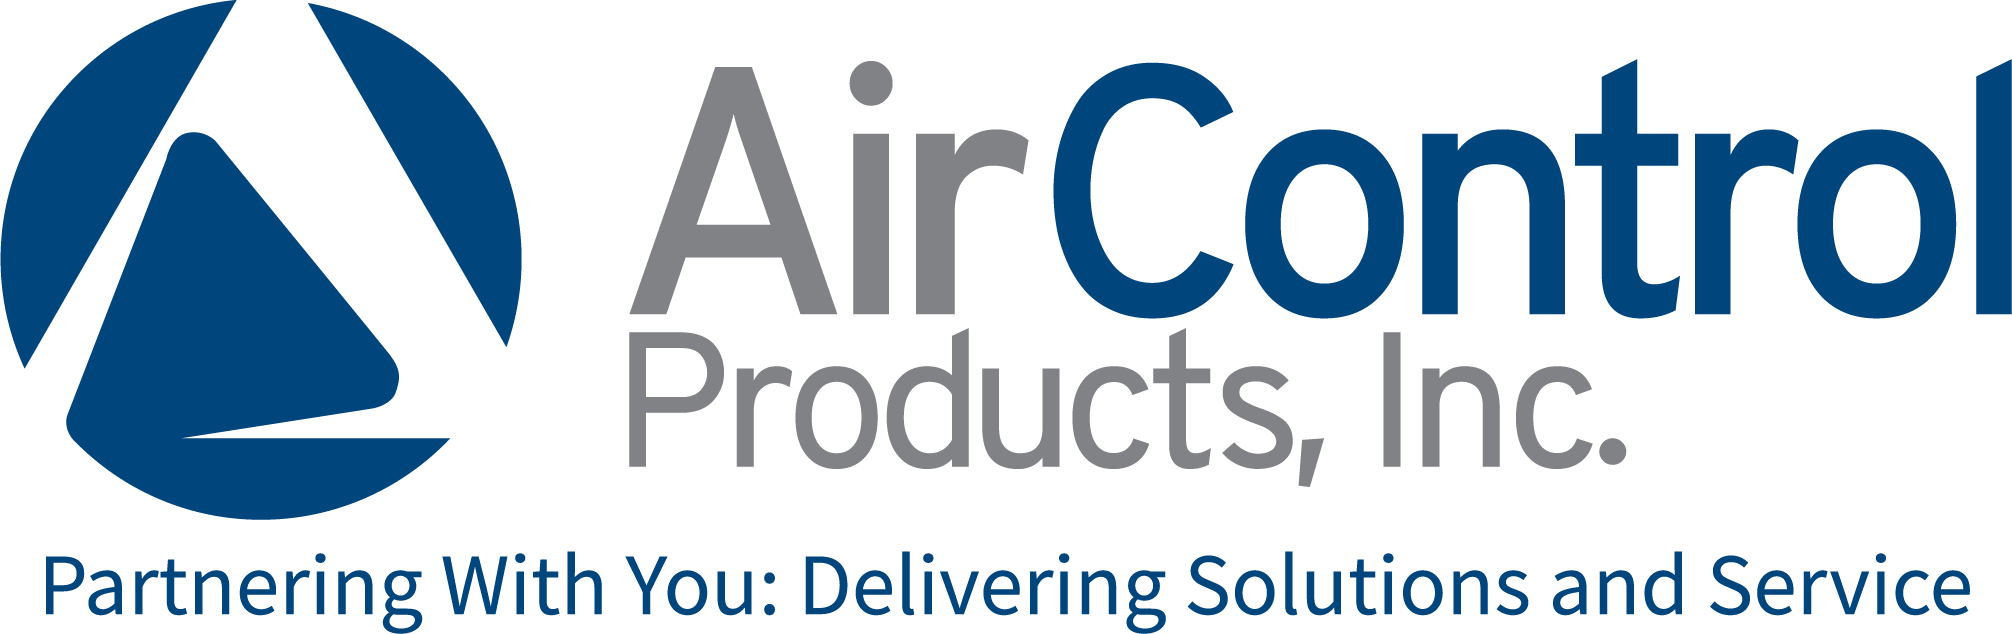 Air Control Products, Inc. Company Logo